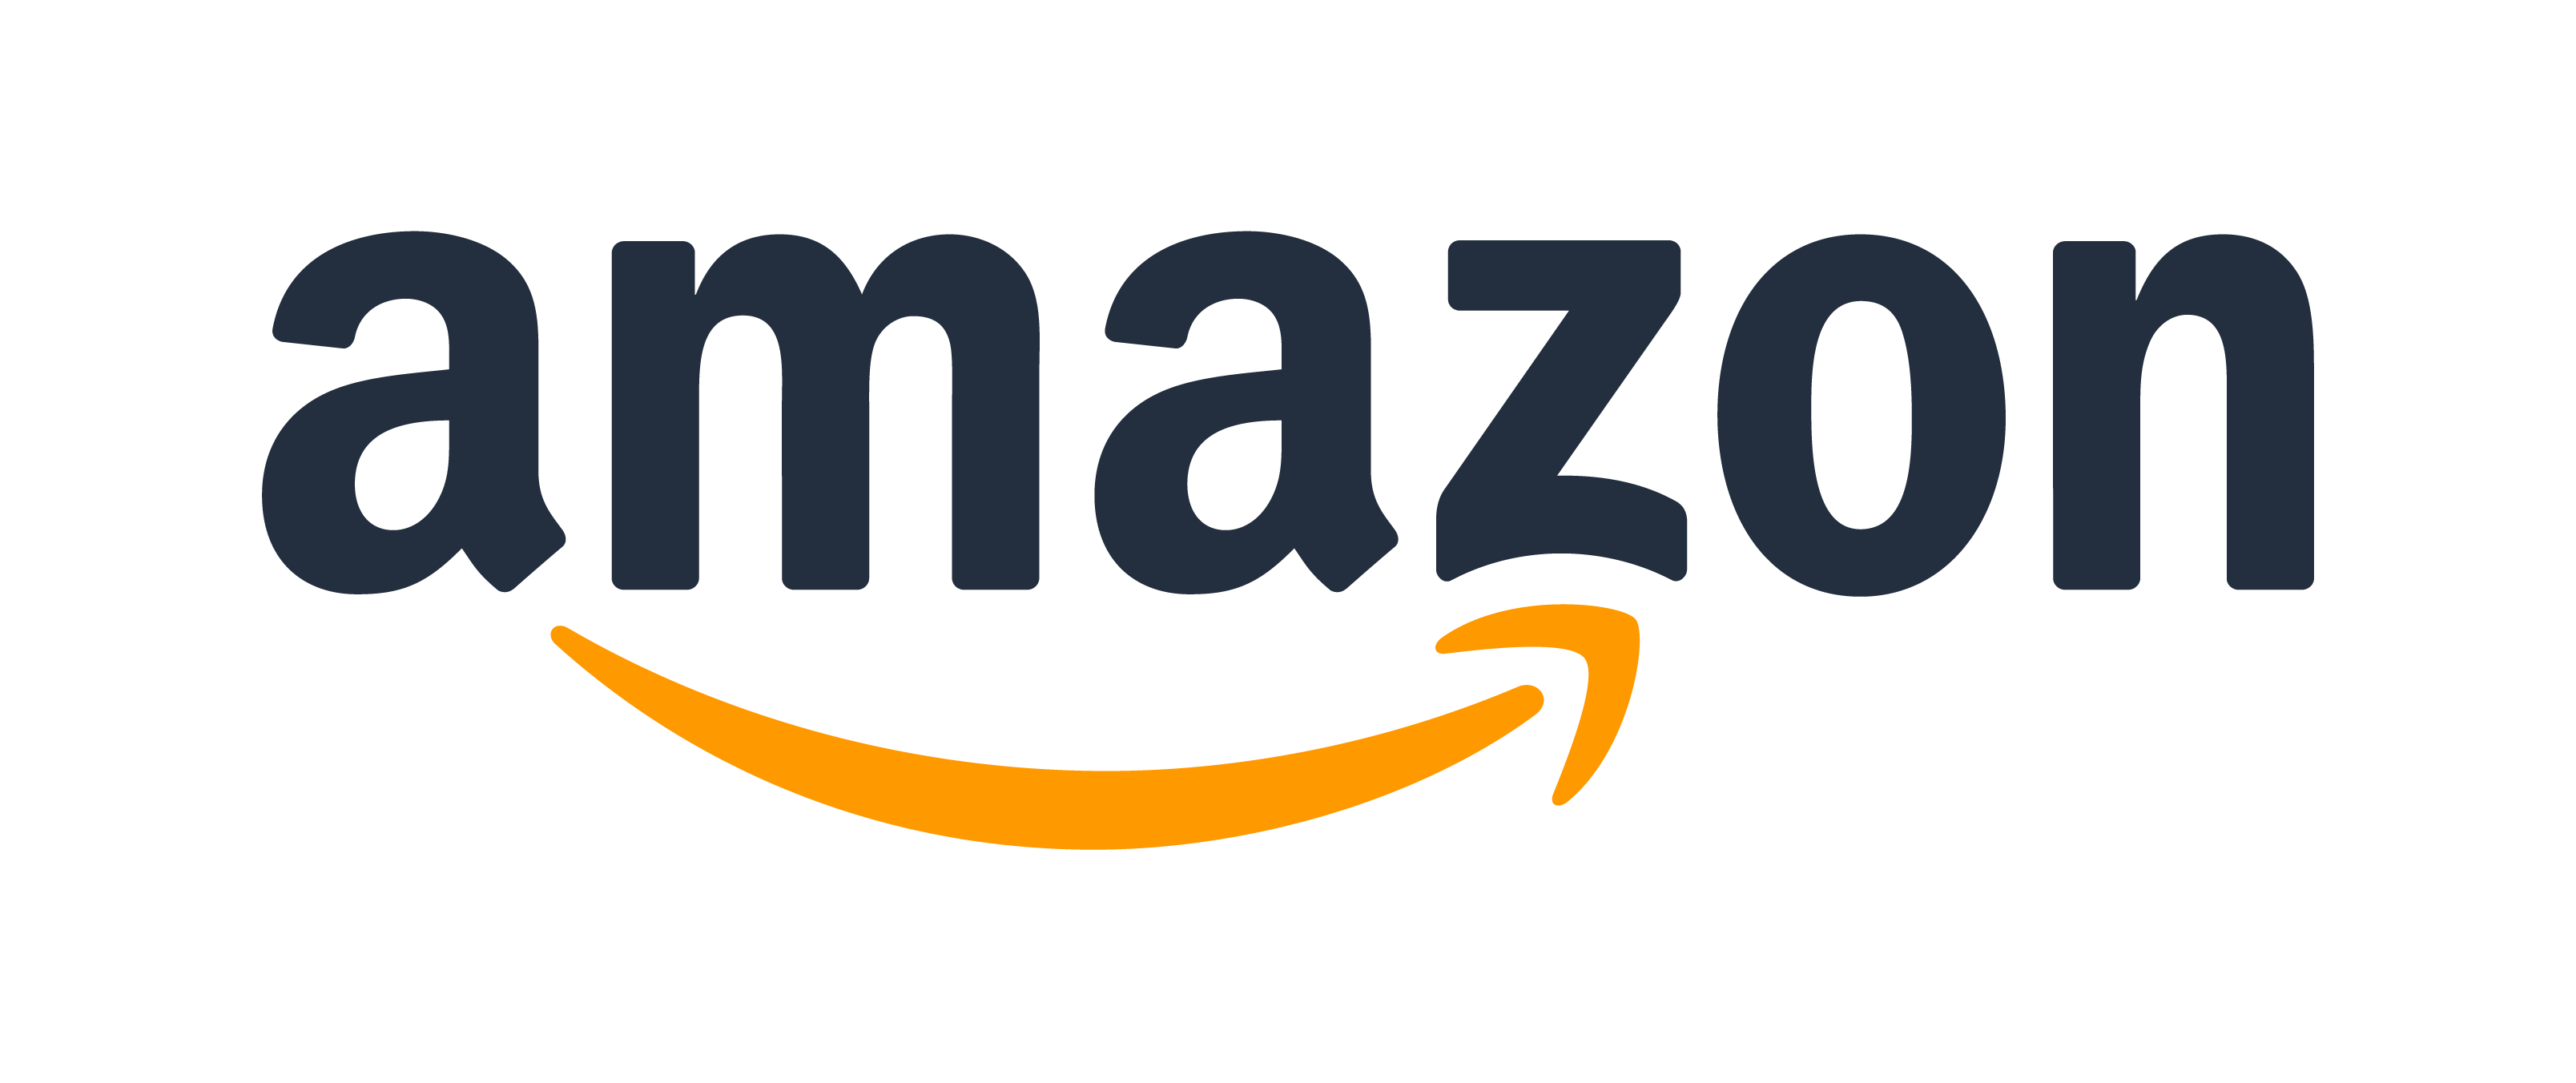 Amazon Prime Air Logo - Images and videos | Amazon.com, Inc. - Press Room